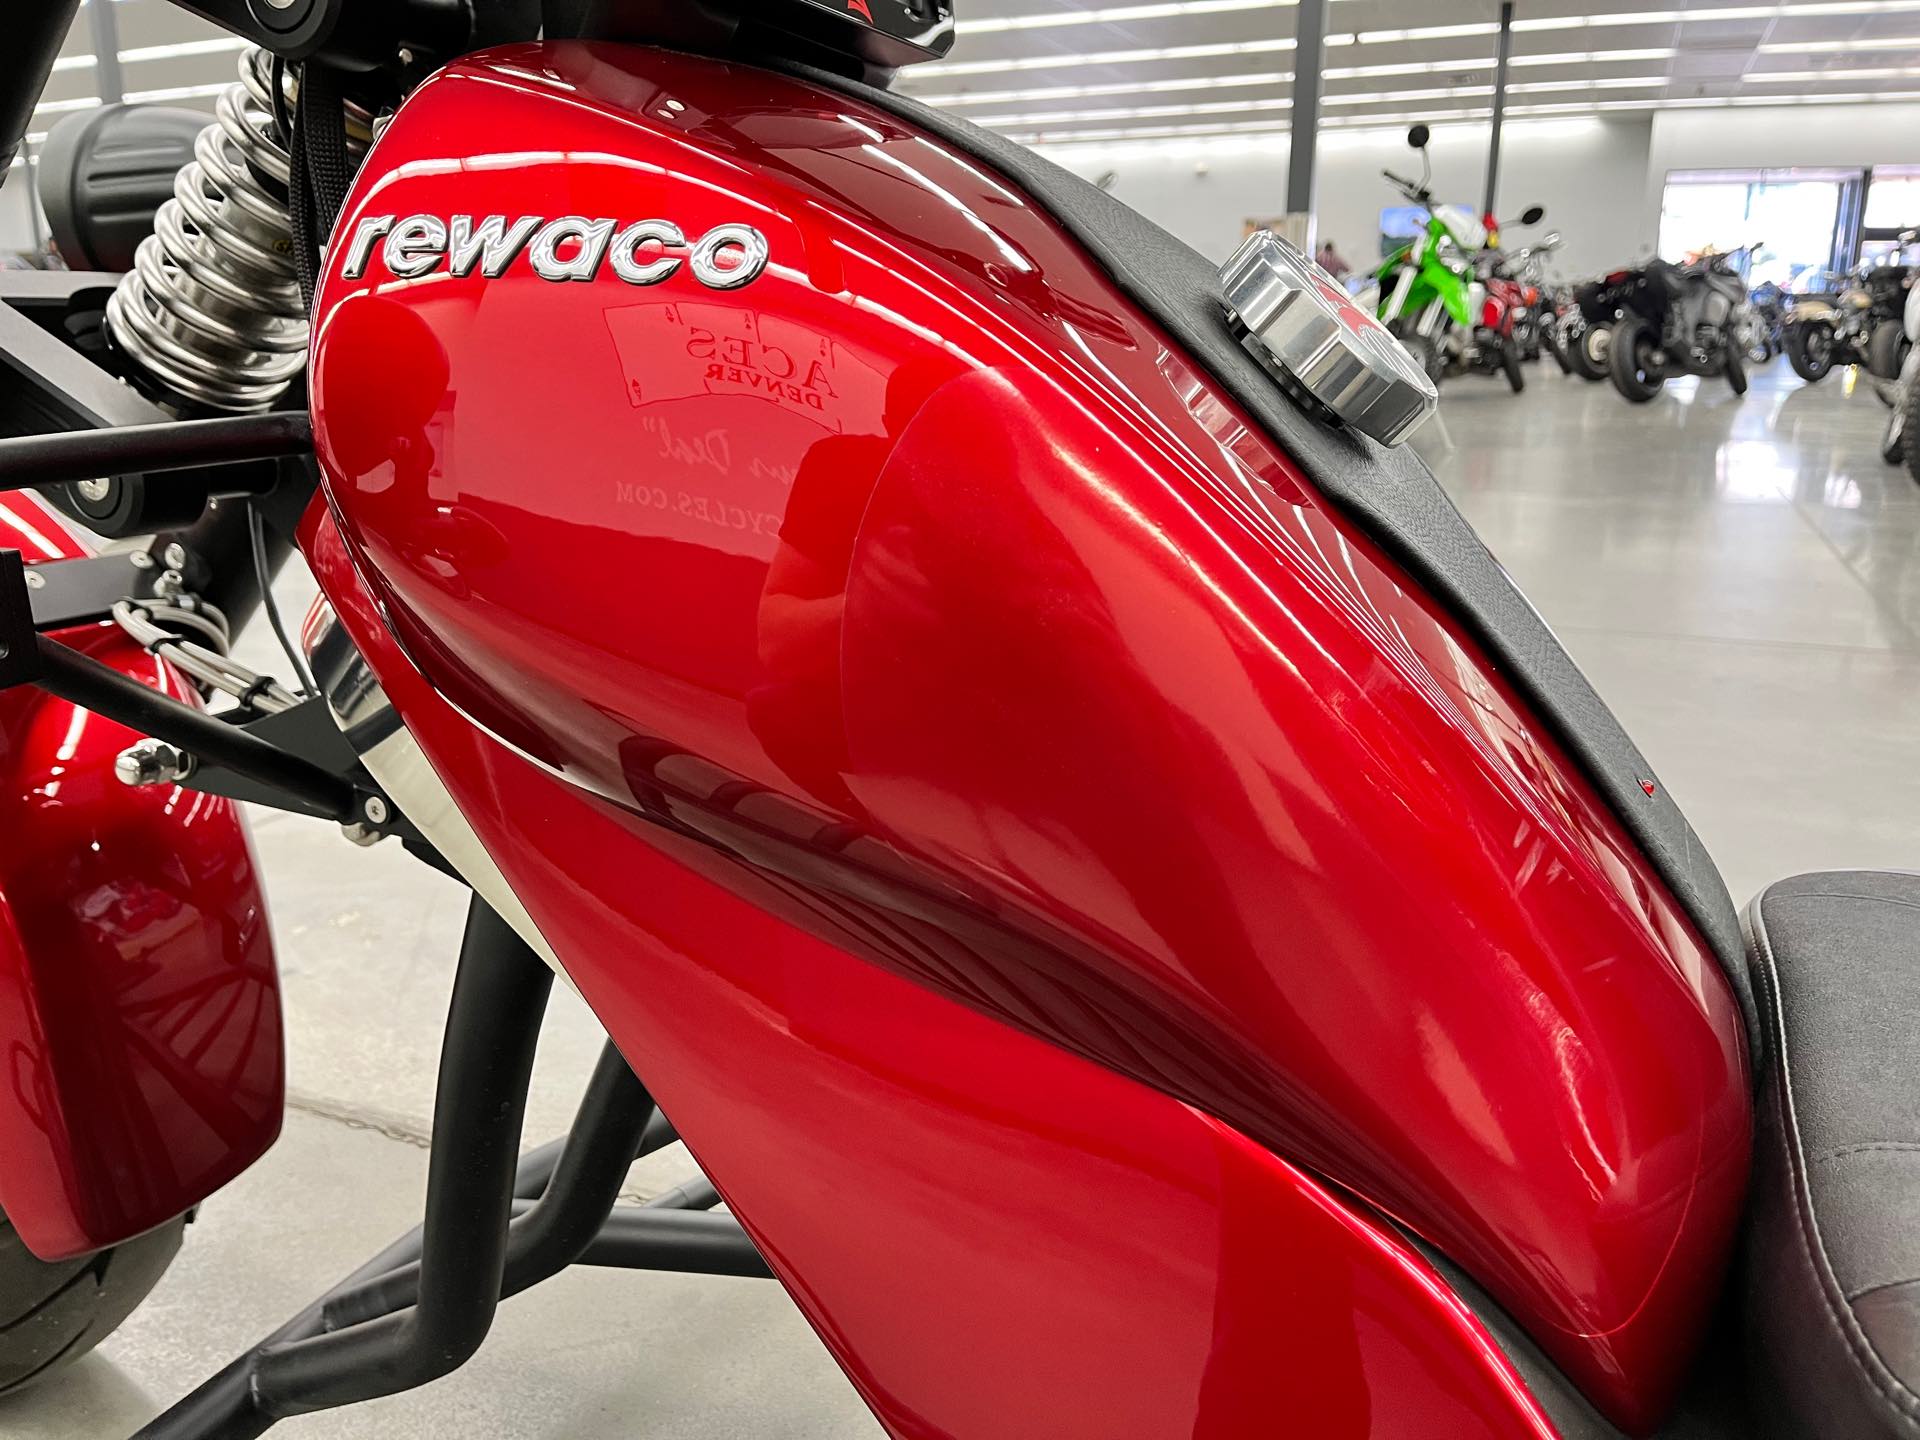 2022 REWACO LT-2 Turbo w Blackline pkg at Aces Motorcycles - Denver